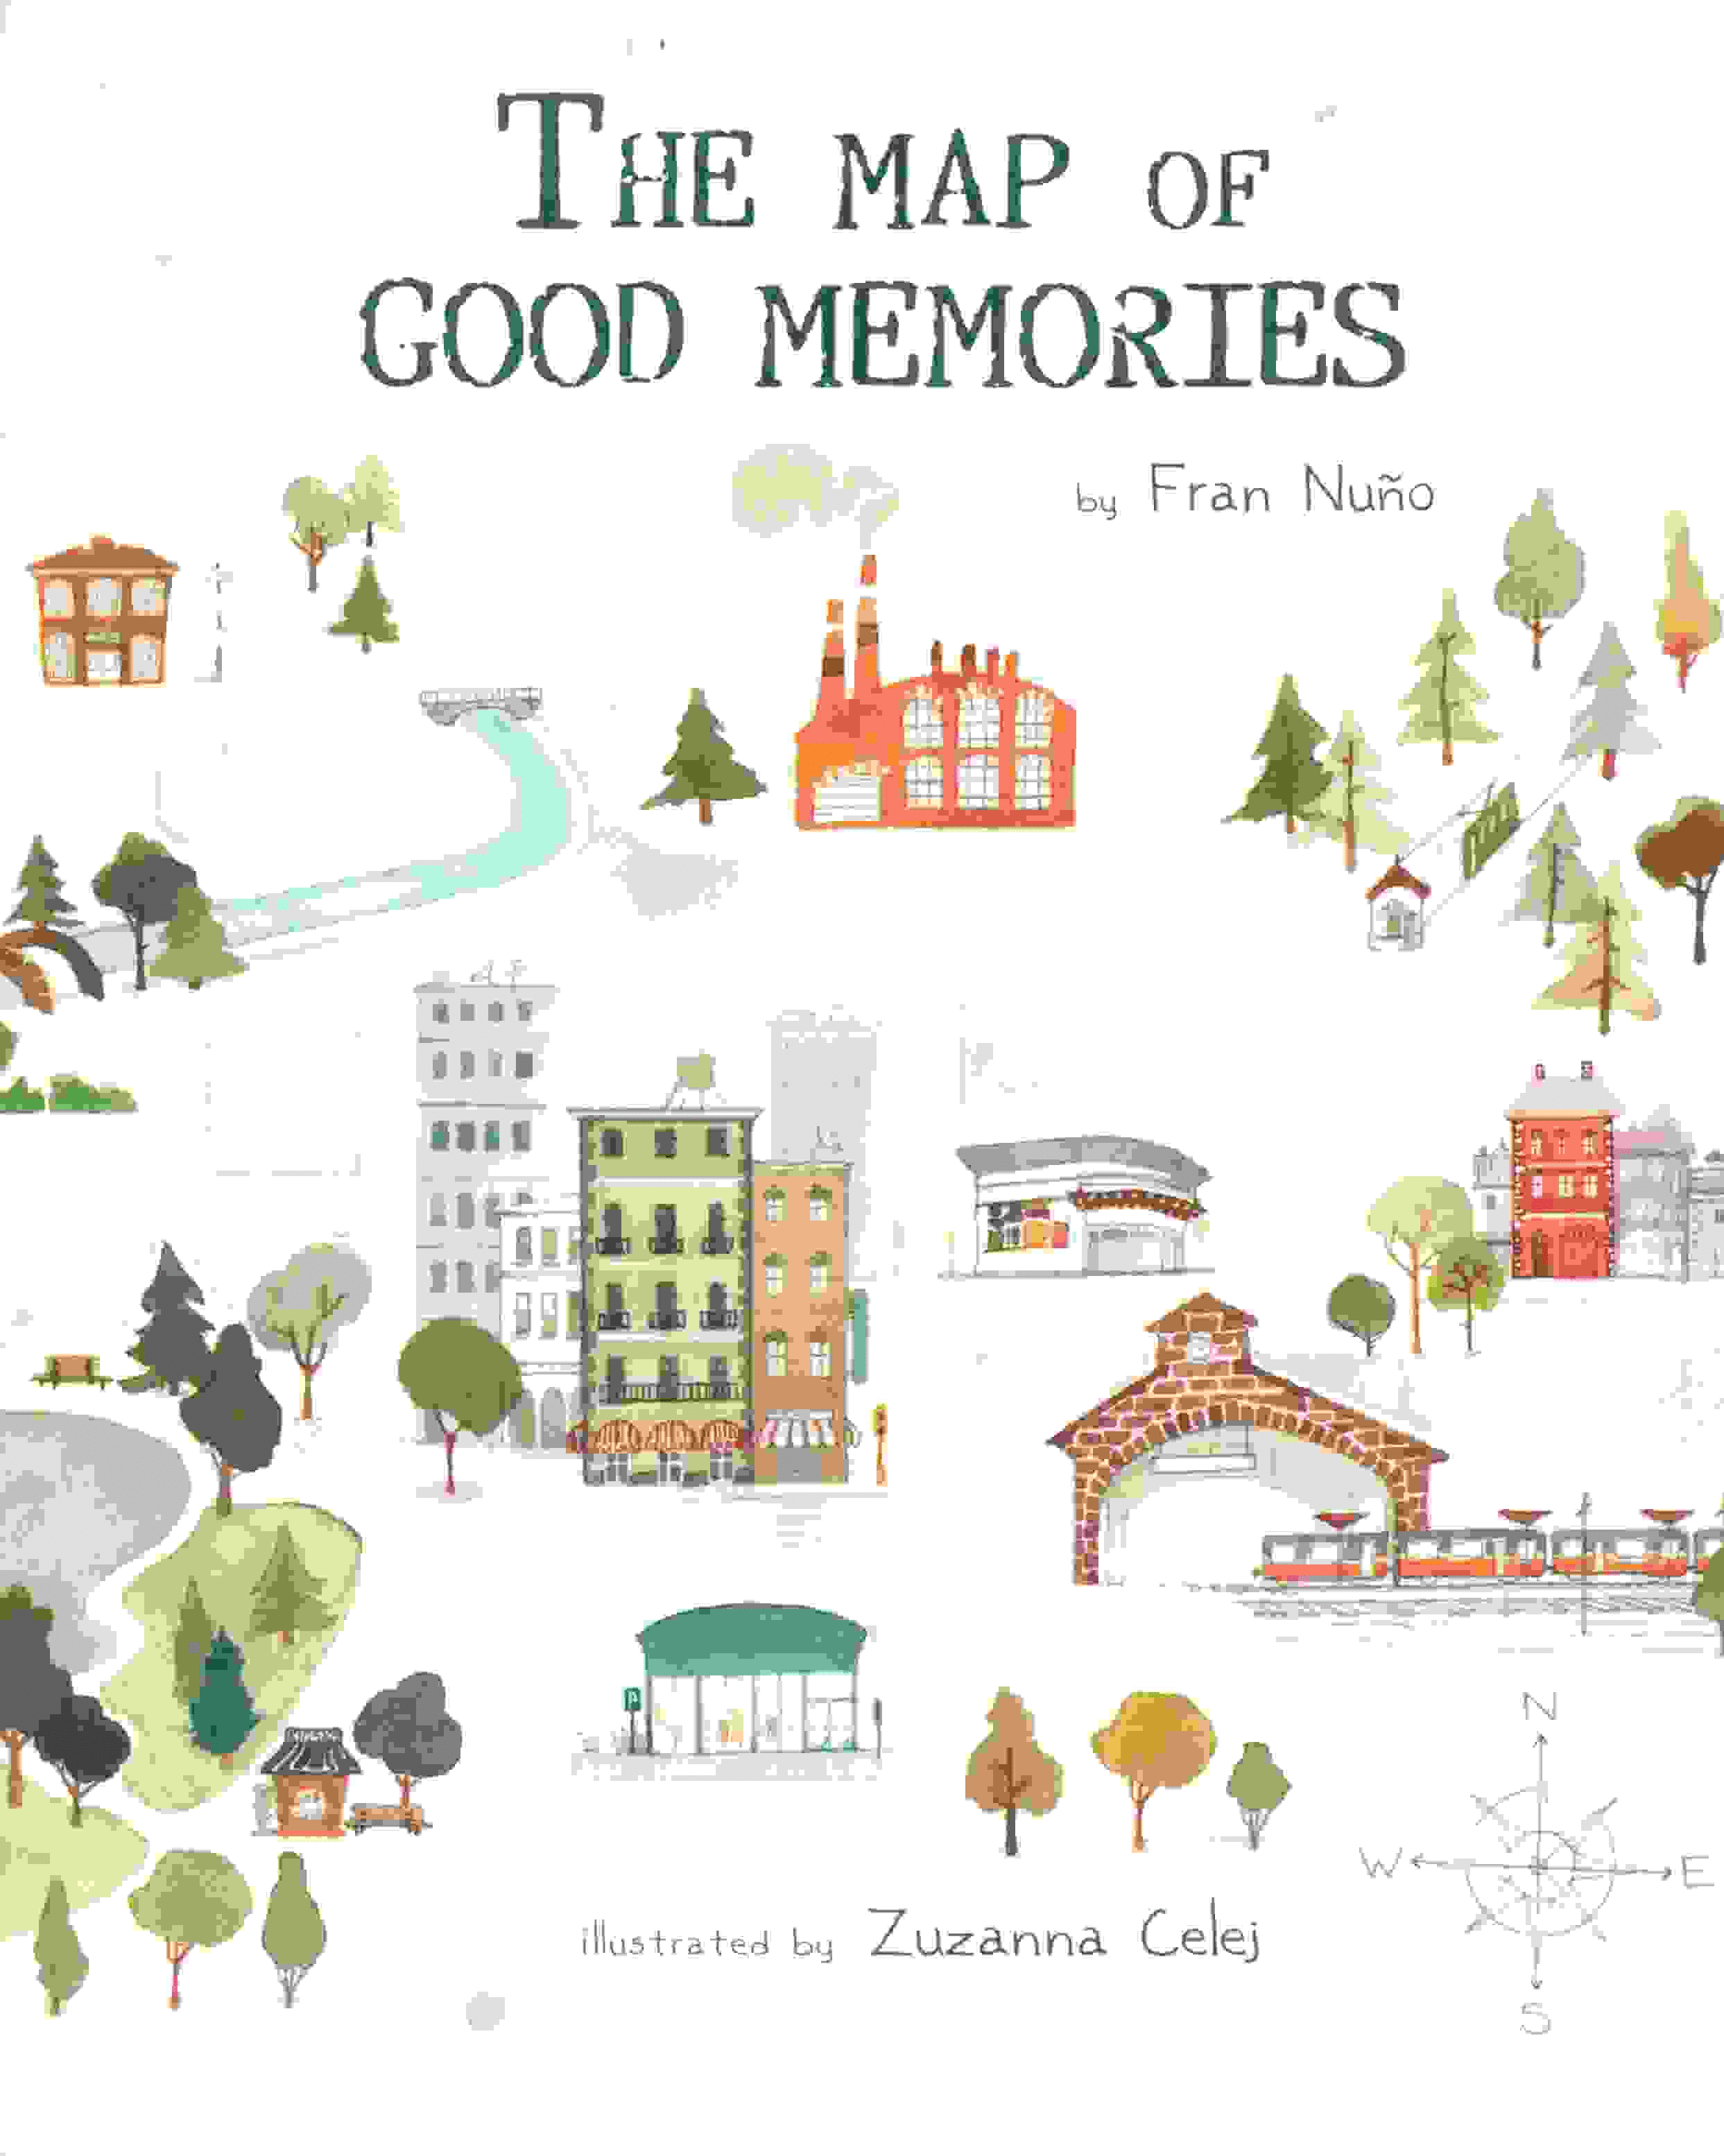 THE MAP OF GOOD MEMORIES